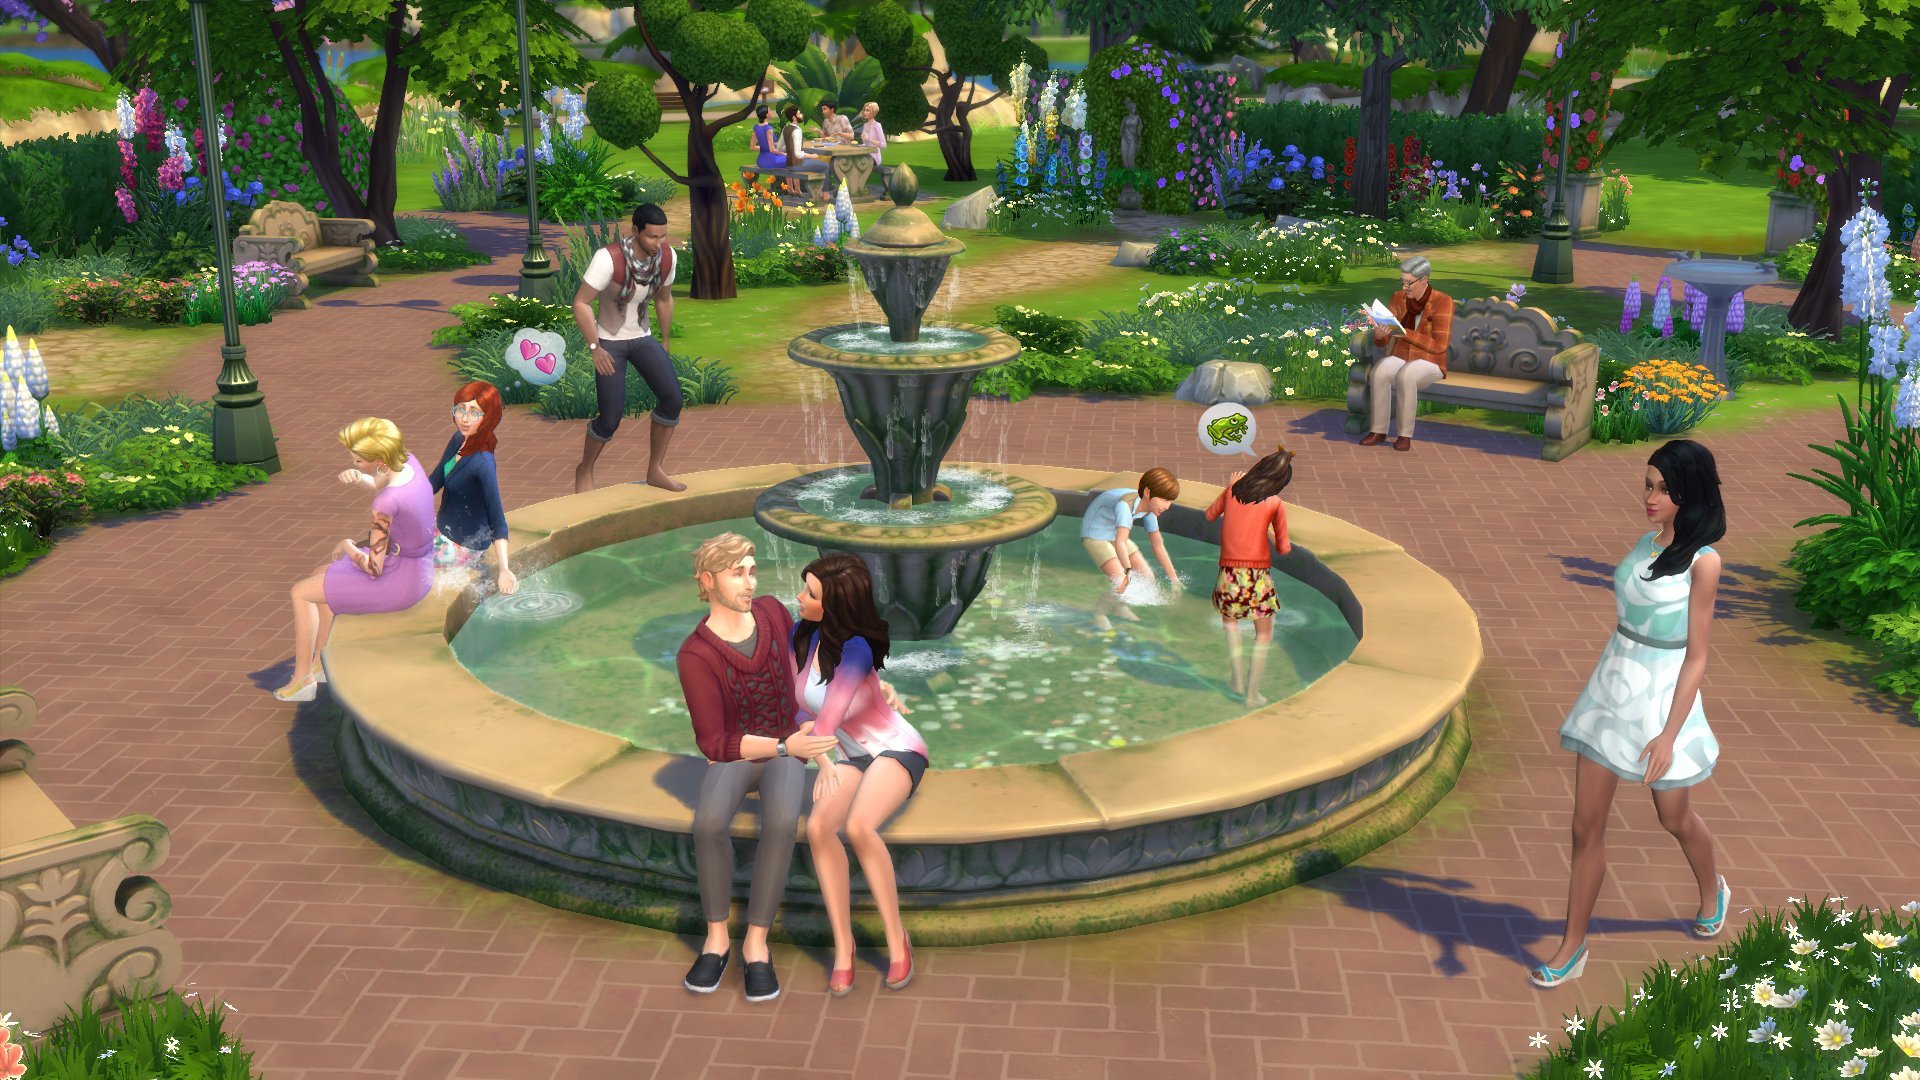 The Sims 4 - Romantic Garden Stuff - Origin PC [Online Game Code]